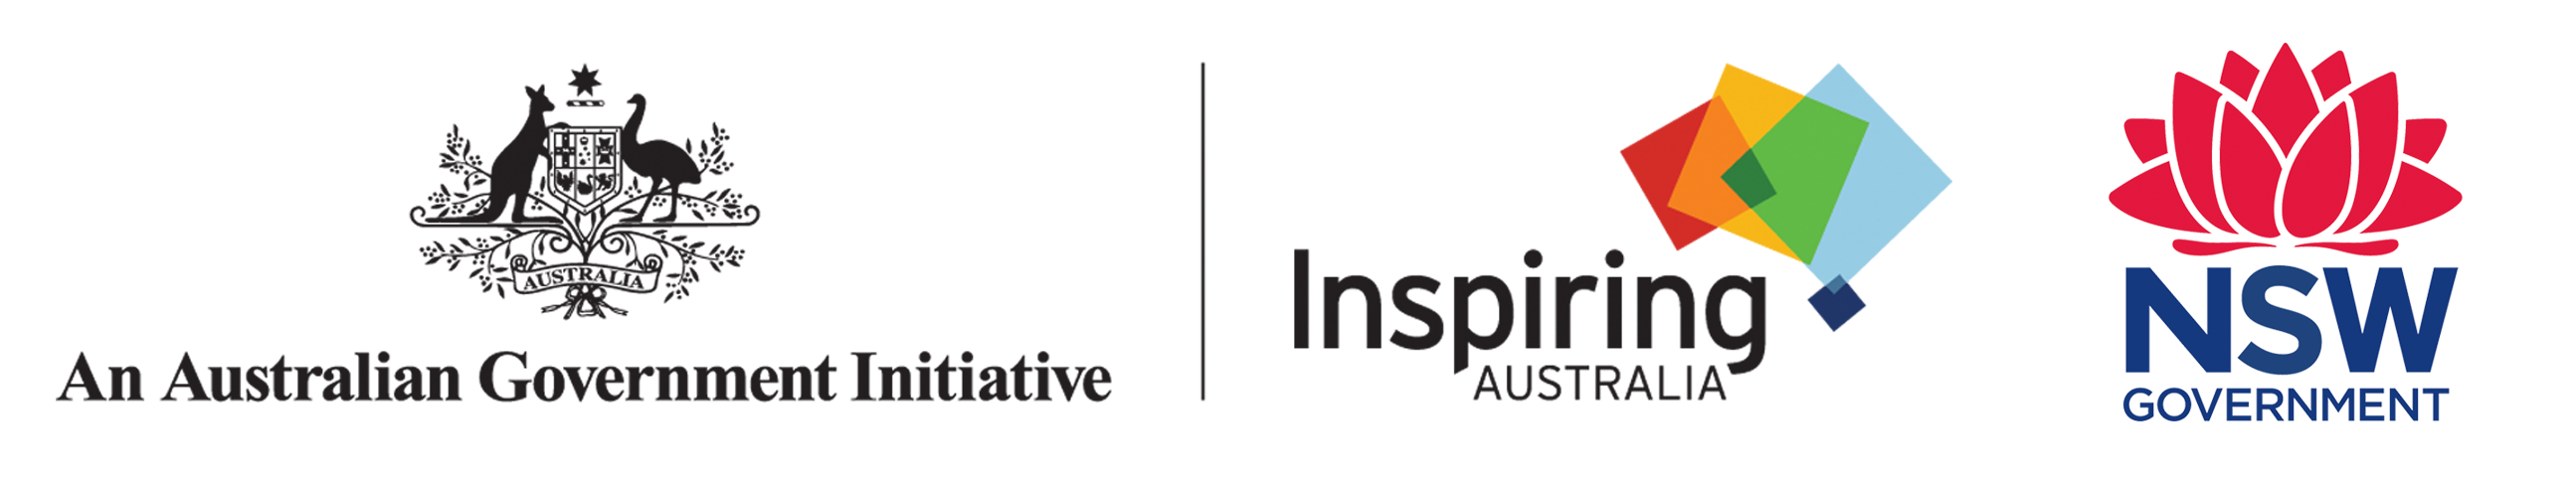 Inspiring Australia and NSW Government logos